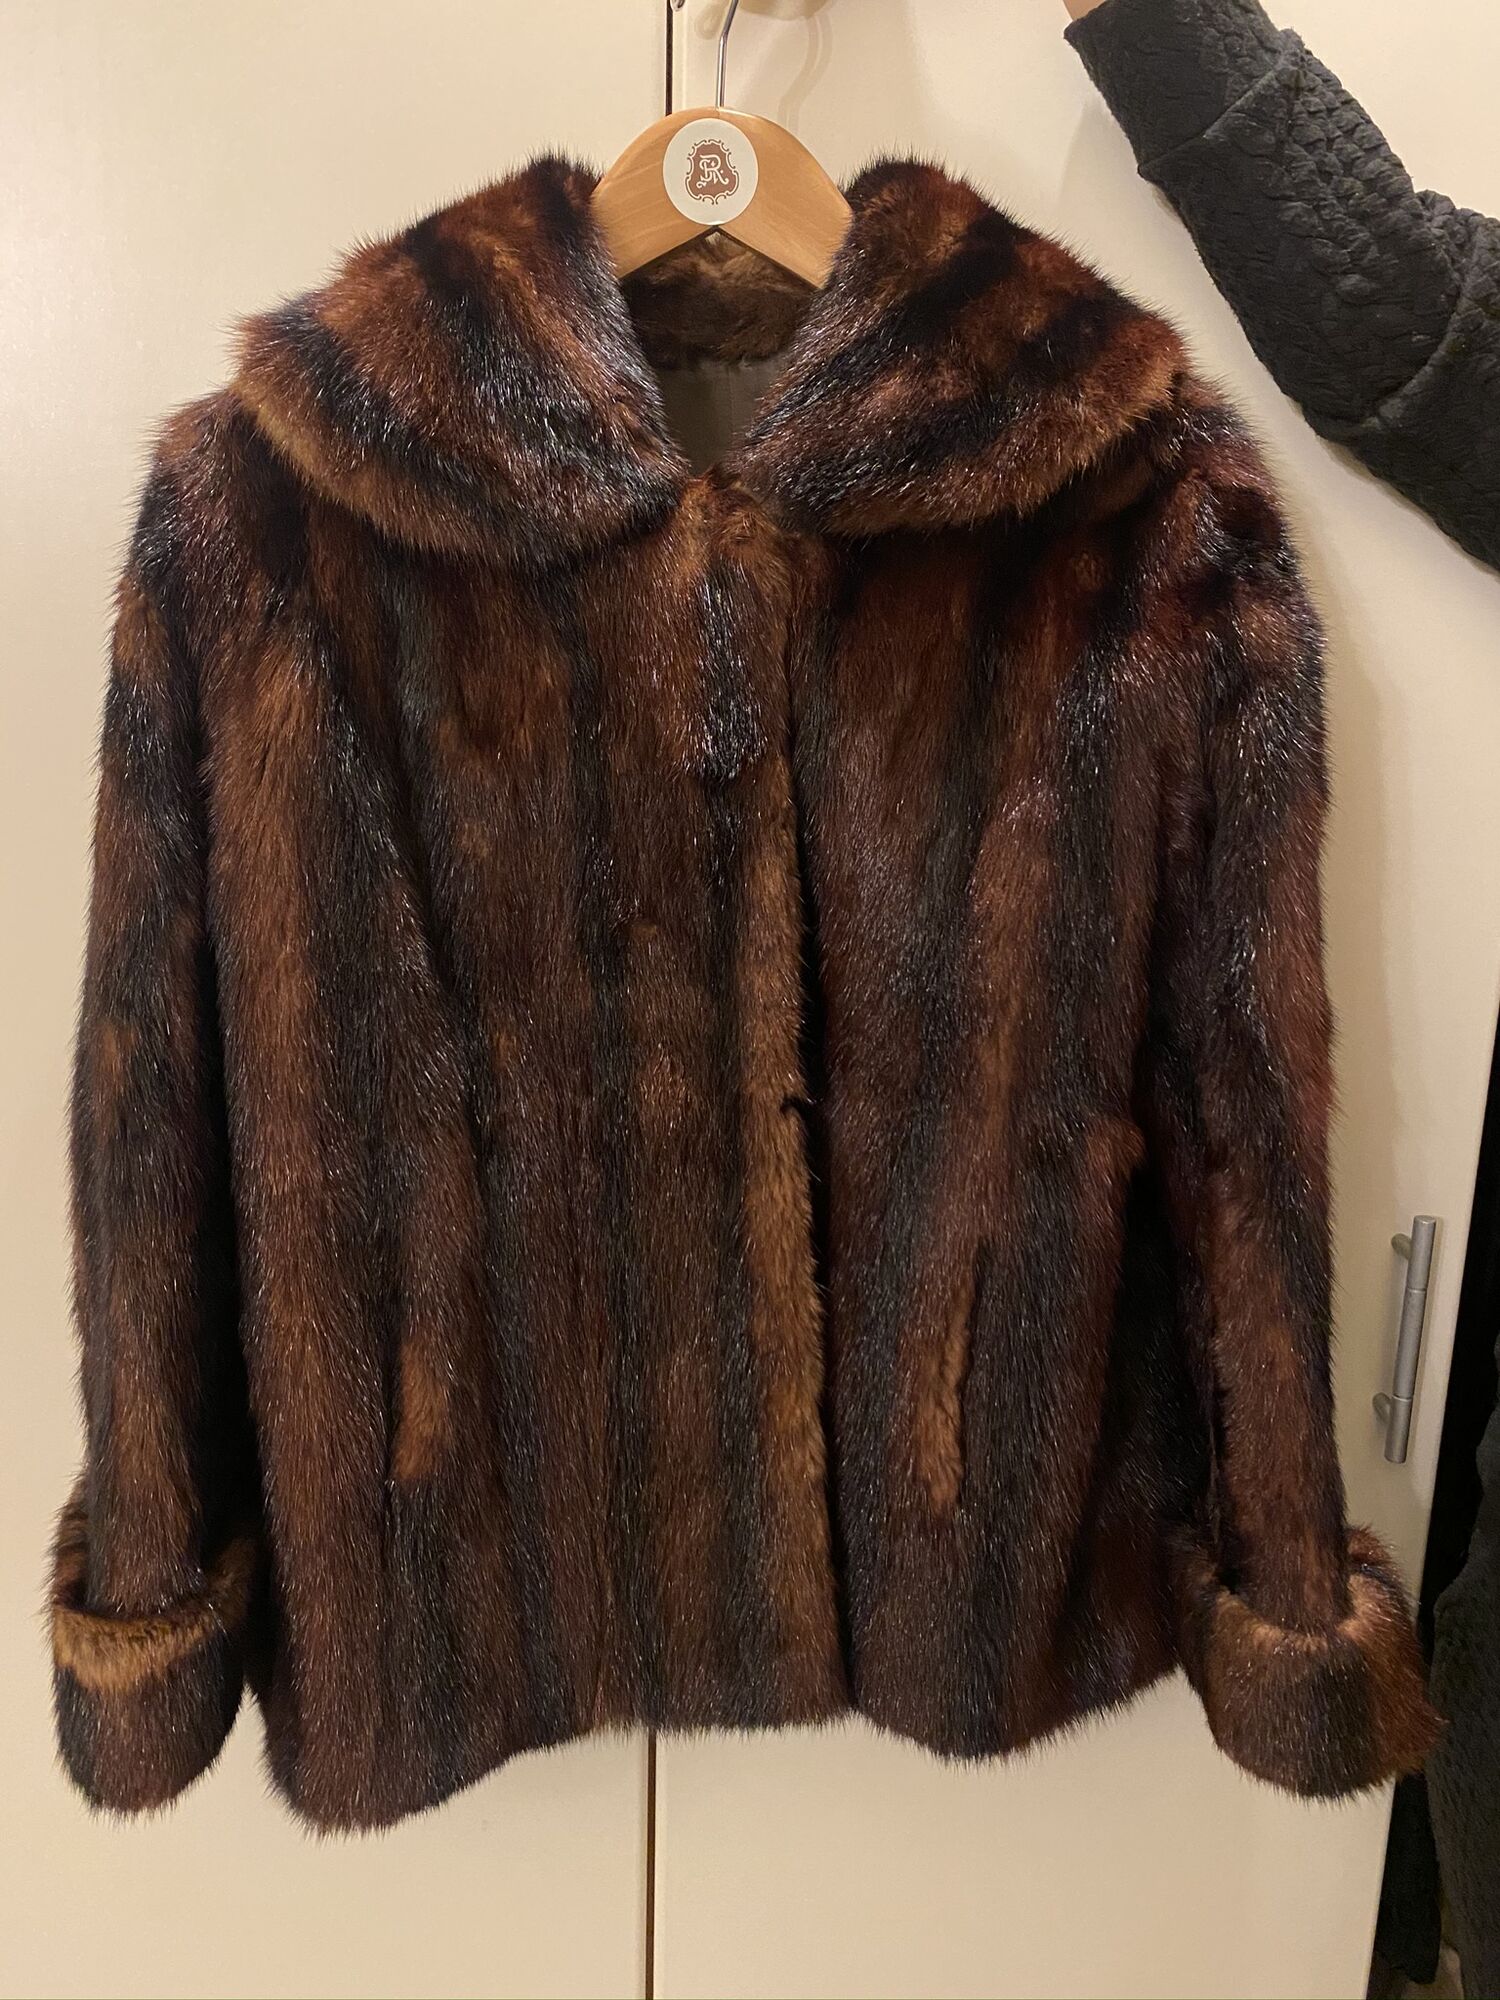 Lady Slippers Vintage Autunno I. J. Fox Boston Rex Rabbit Fur, Leather & Fabric Jacket